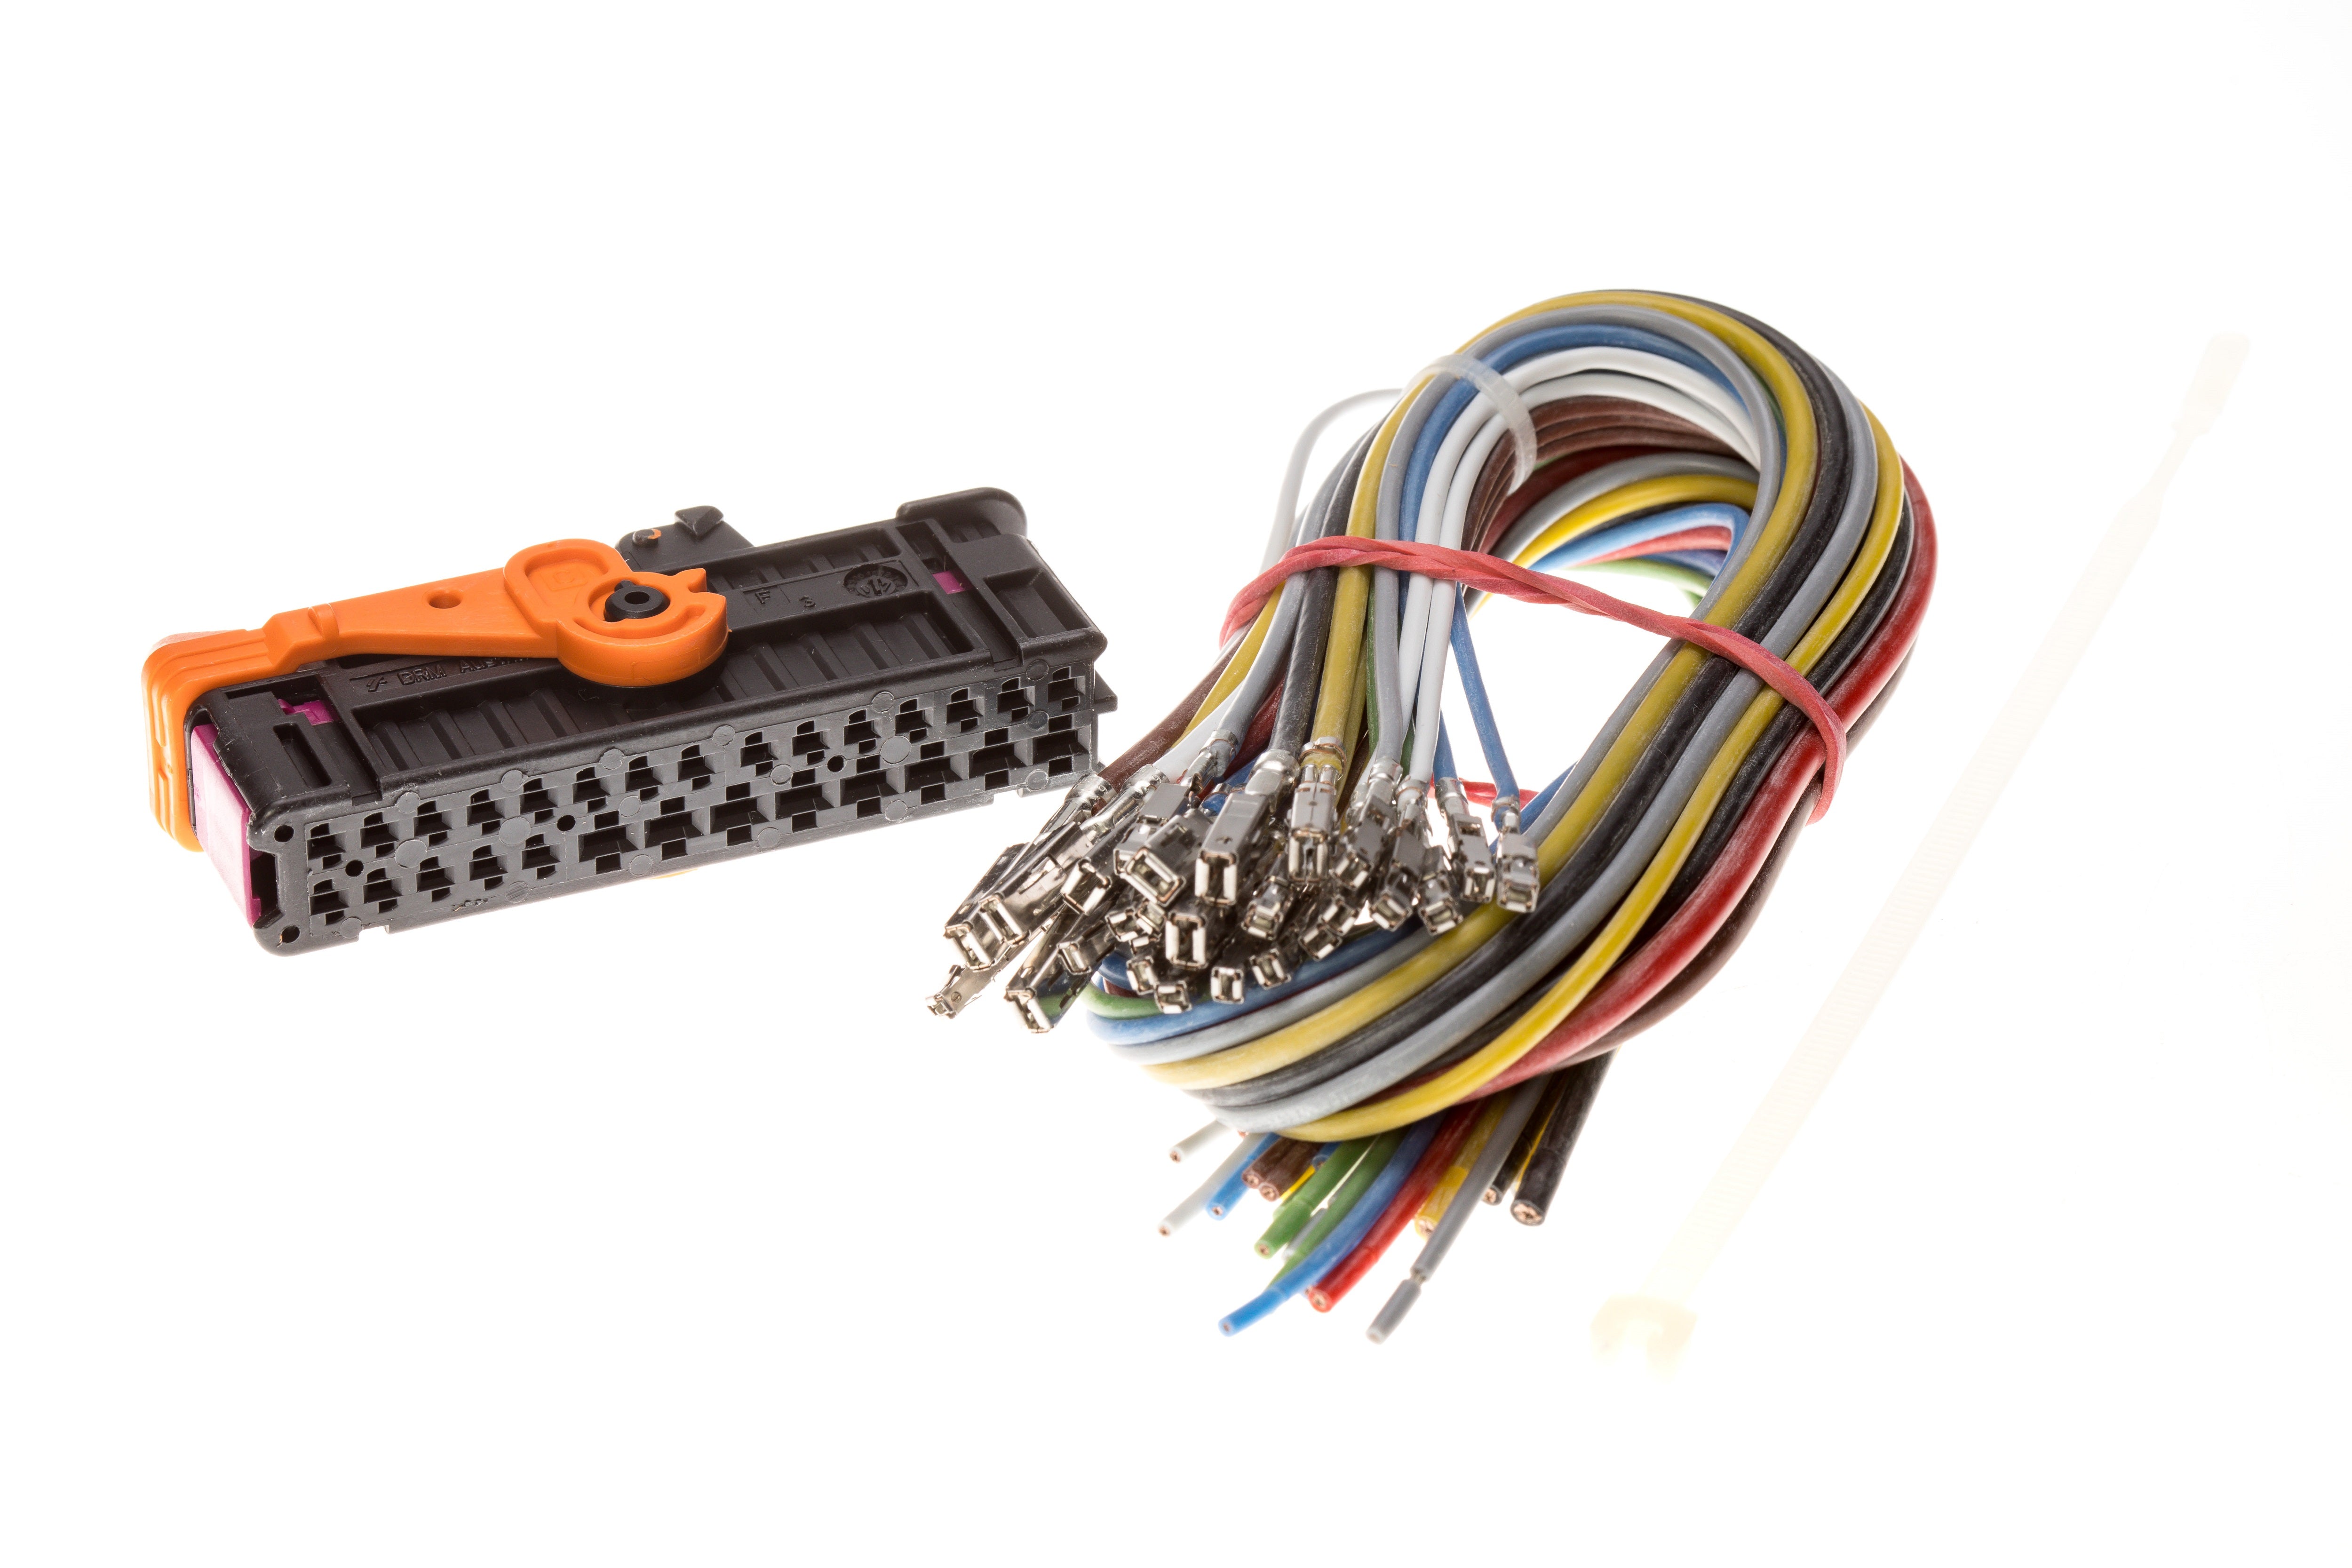 Reparatursatz Kabelsatz SenCom 503020 online kaufen